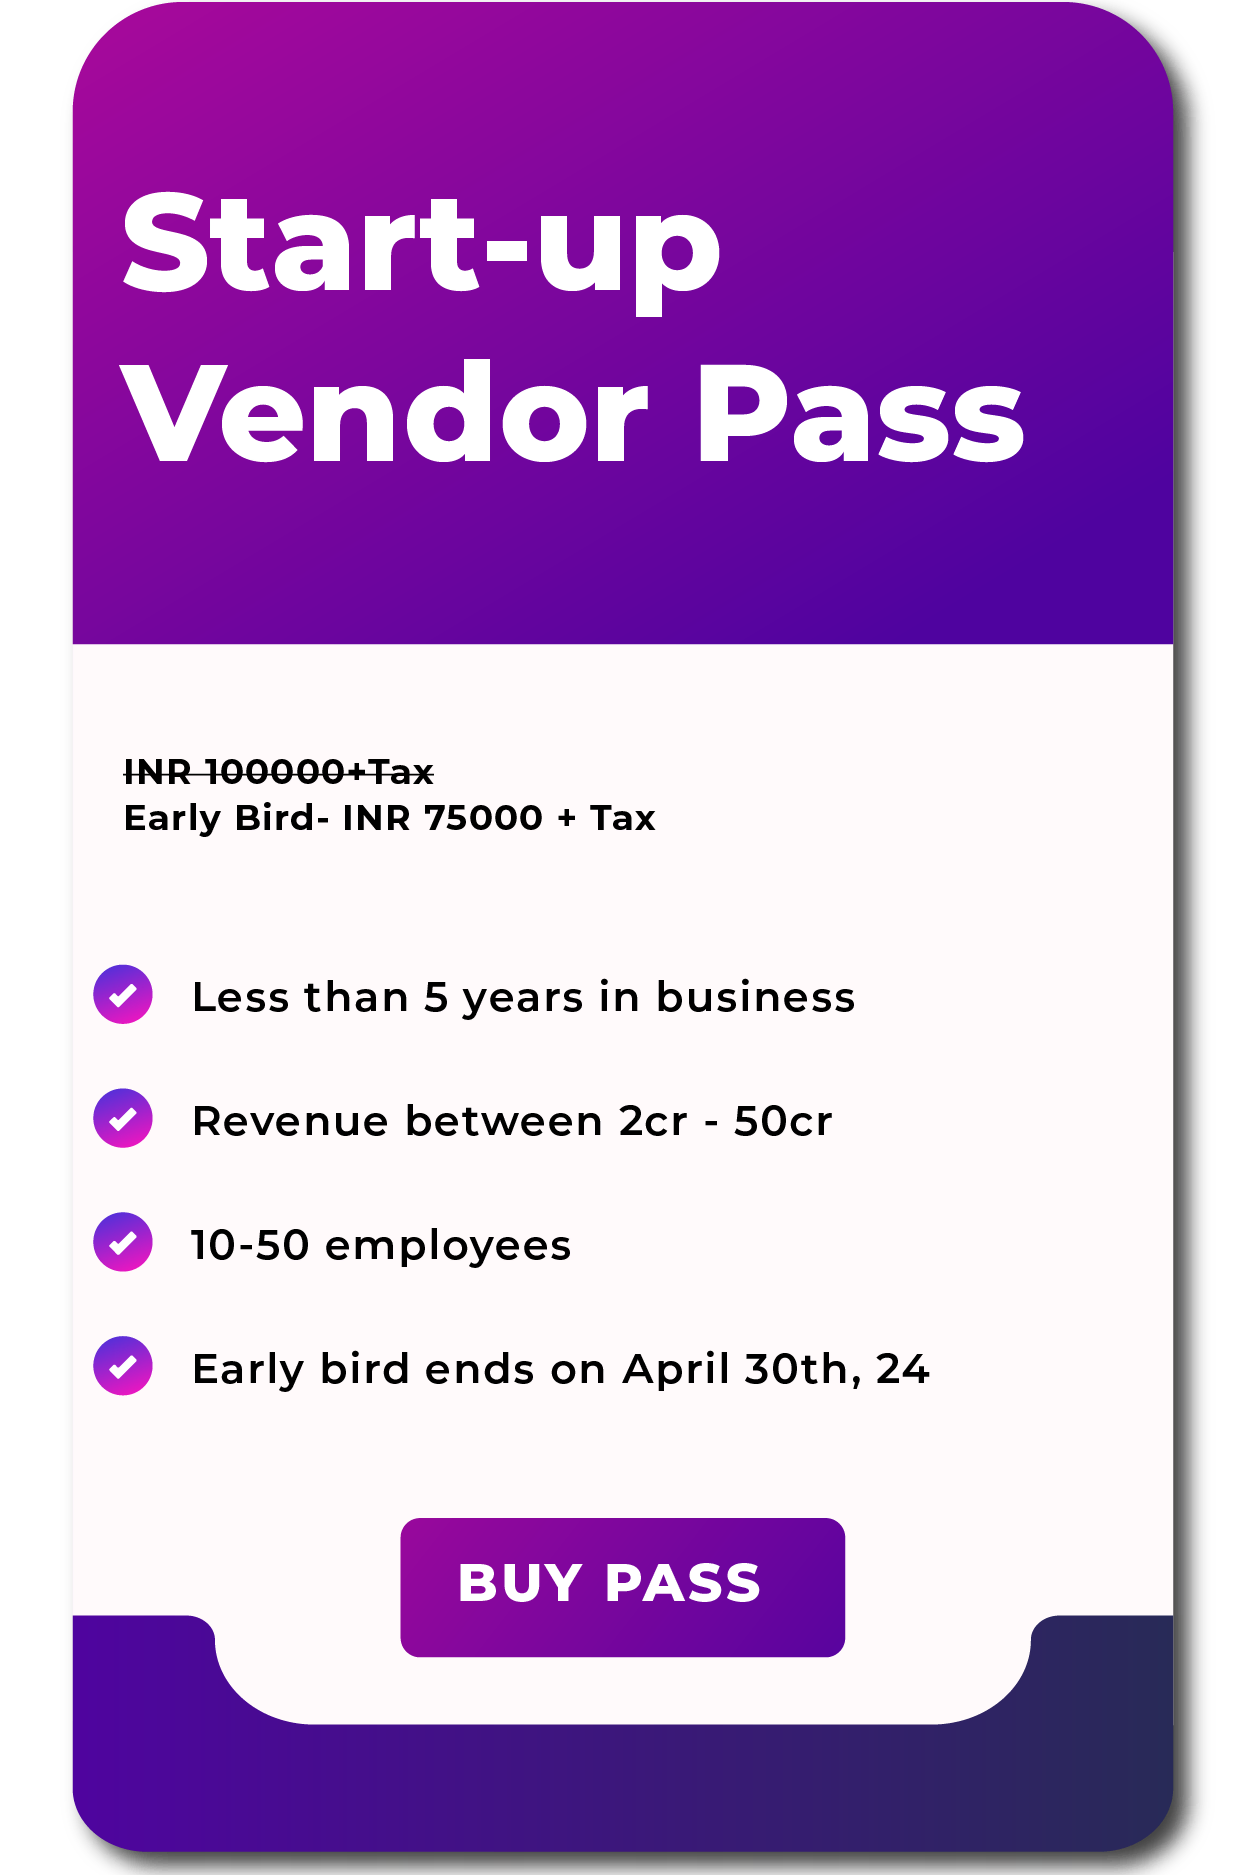 Start-up Vendor Pass